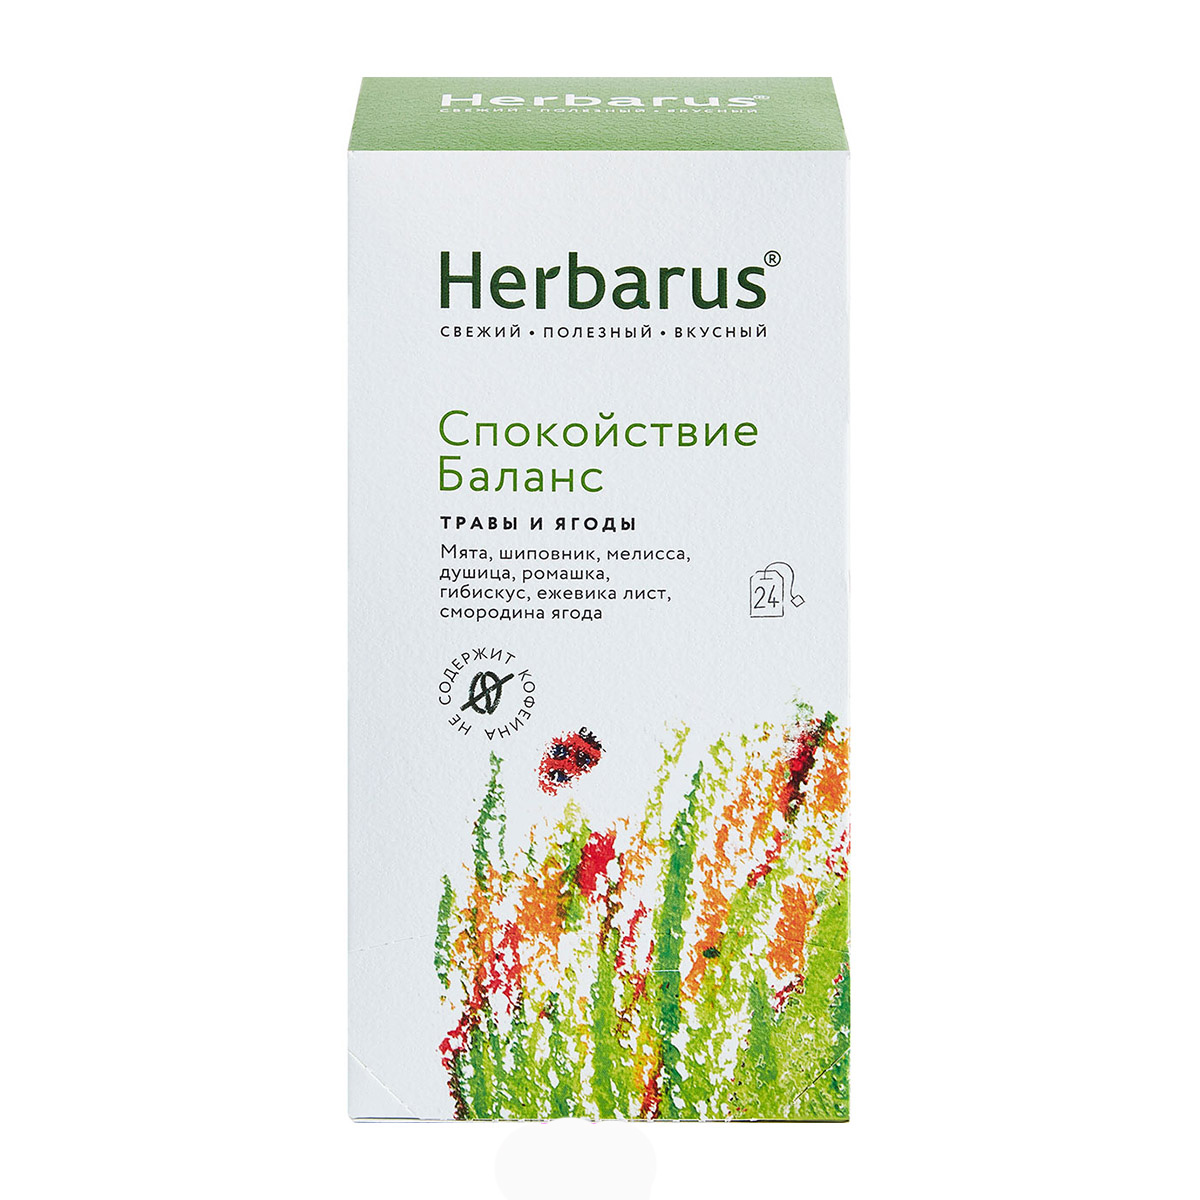 Herbarus Чайный напиток Спокойствие и баланс, 24 шт х 1,8 г (Herbarus, Травы и ягоды) чайный напиток herbarus заряд витаминов 24 пакетика